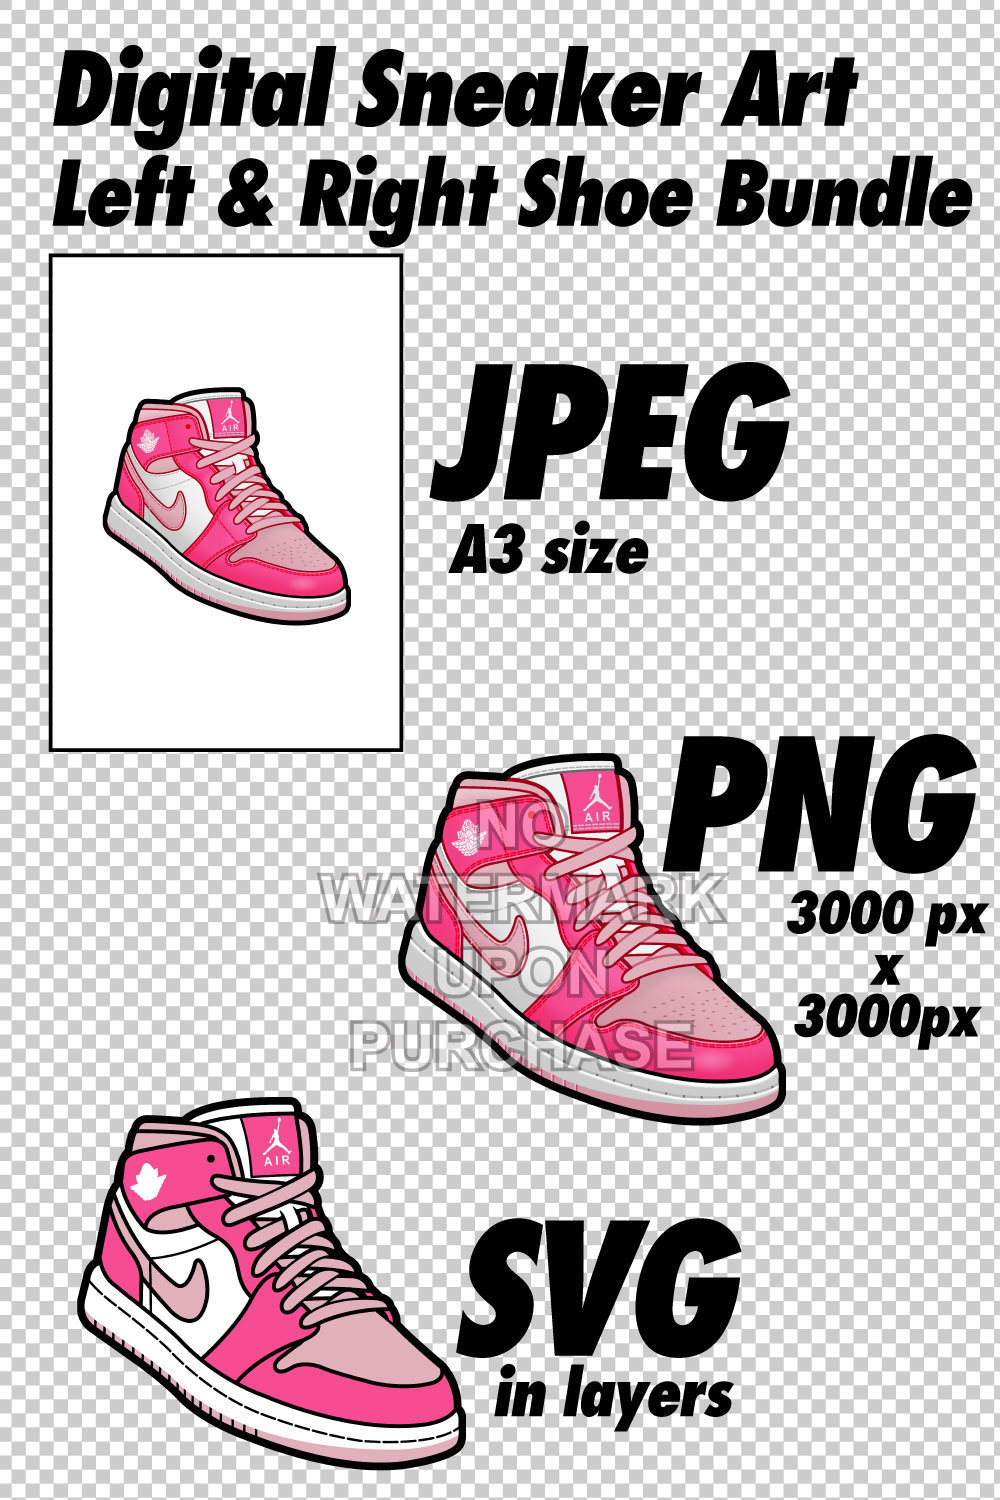 Air Jordan 1 MID Medium Soft Pink JPEG PNG SVG Sneaker Art right & left shoe bundle Digital Download pinterest preview image.